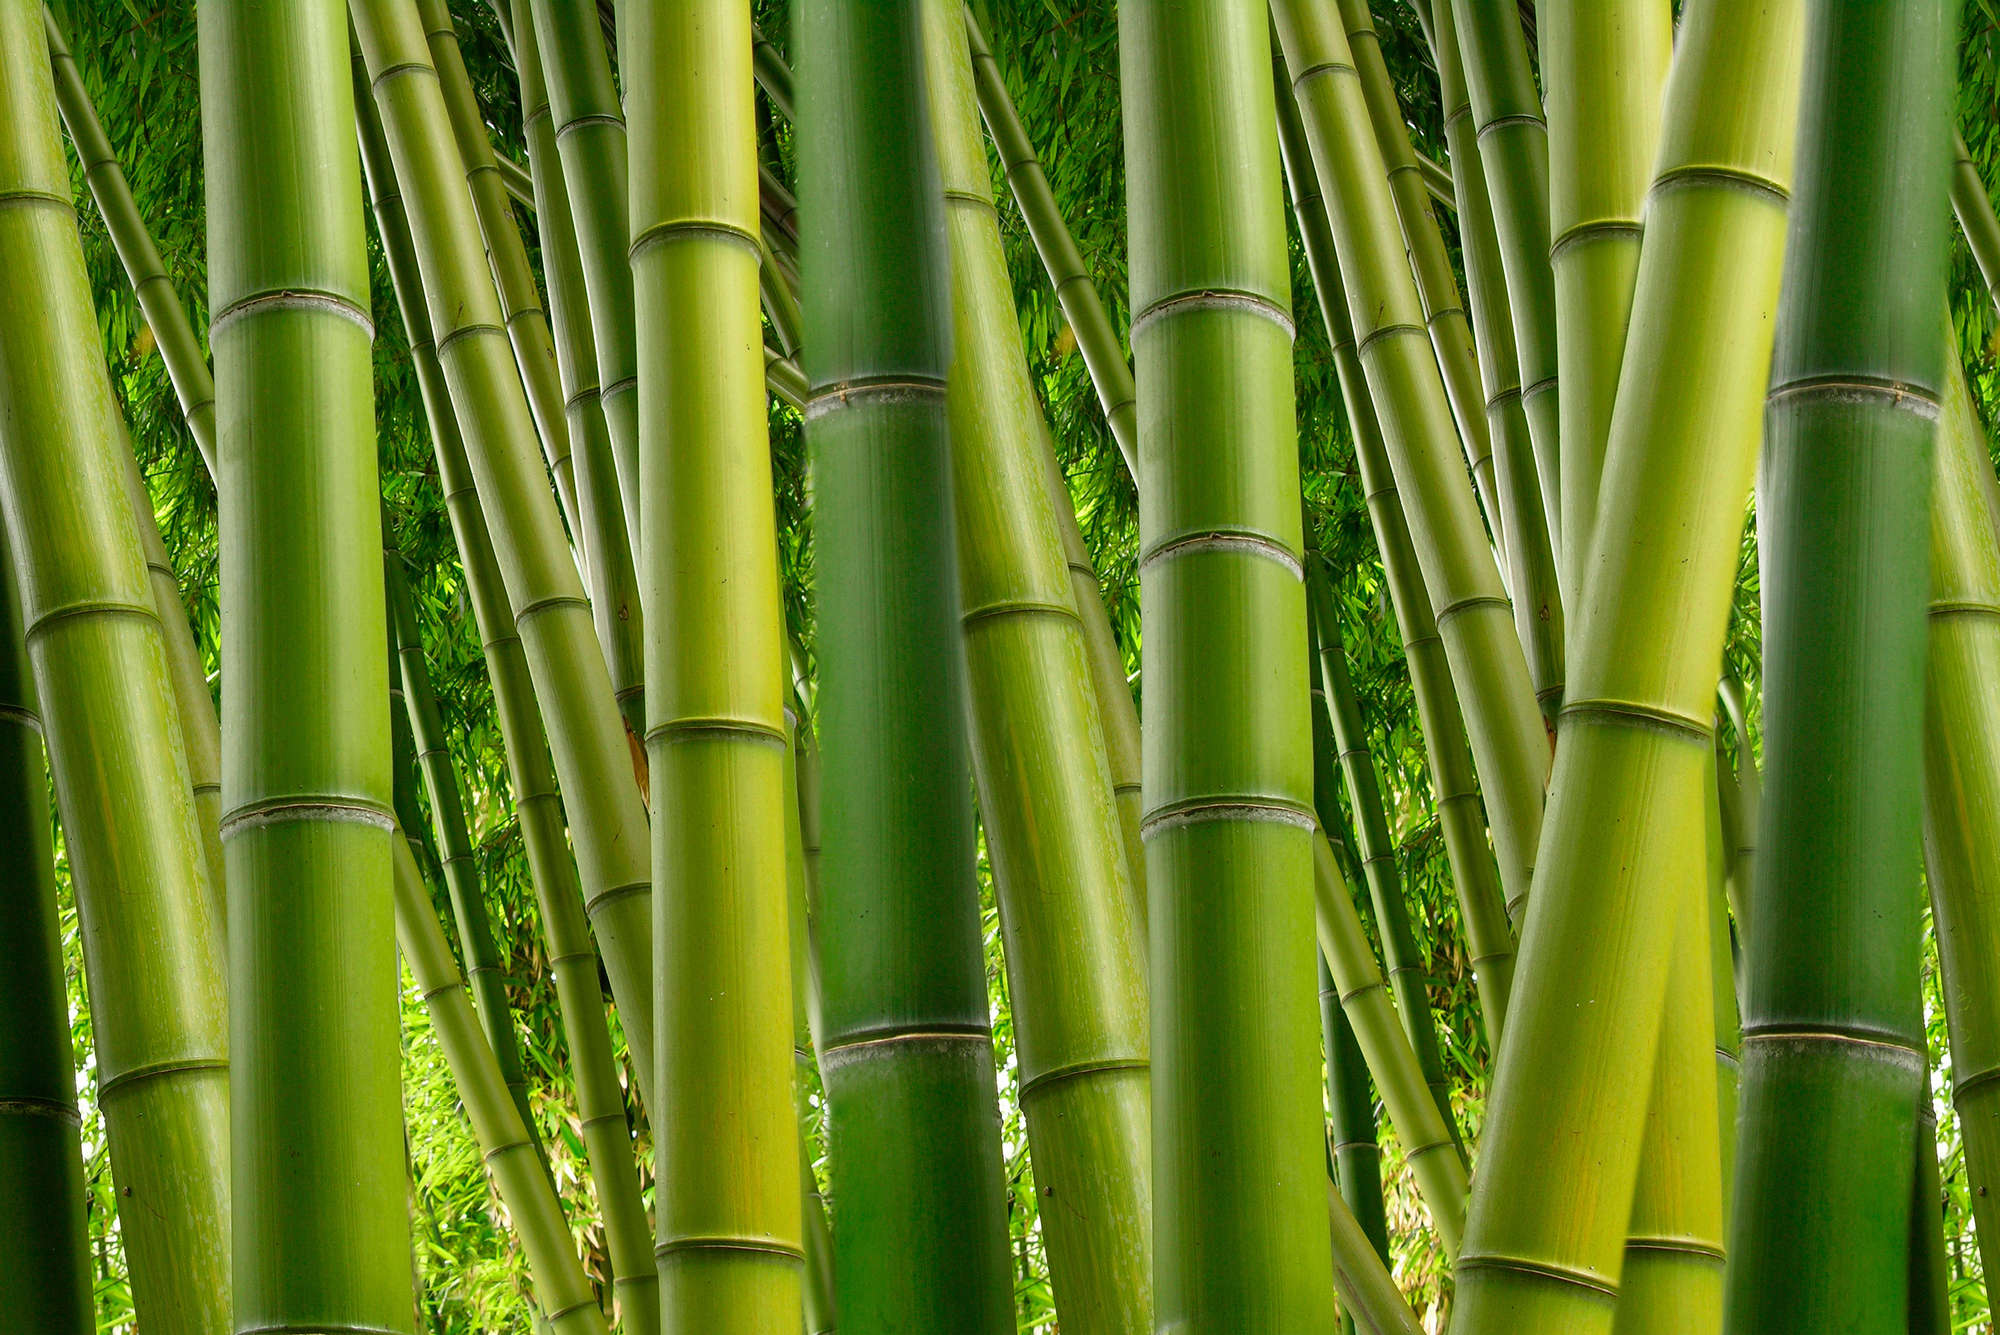             Carta da parati naturale Motivo foresta di bambù su tessuto non tessuto liscio opaco
        